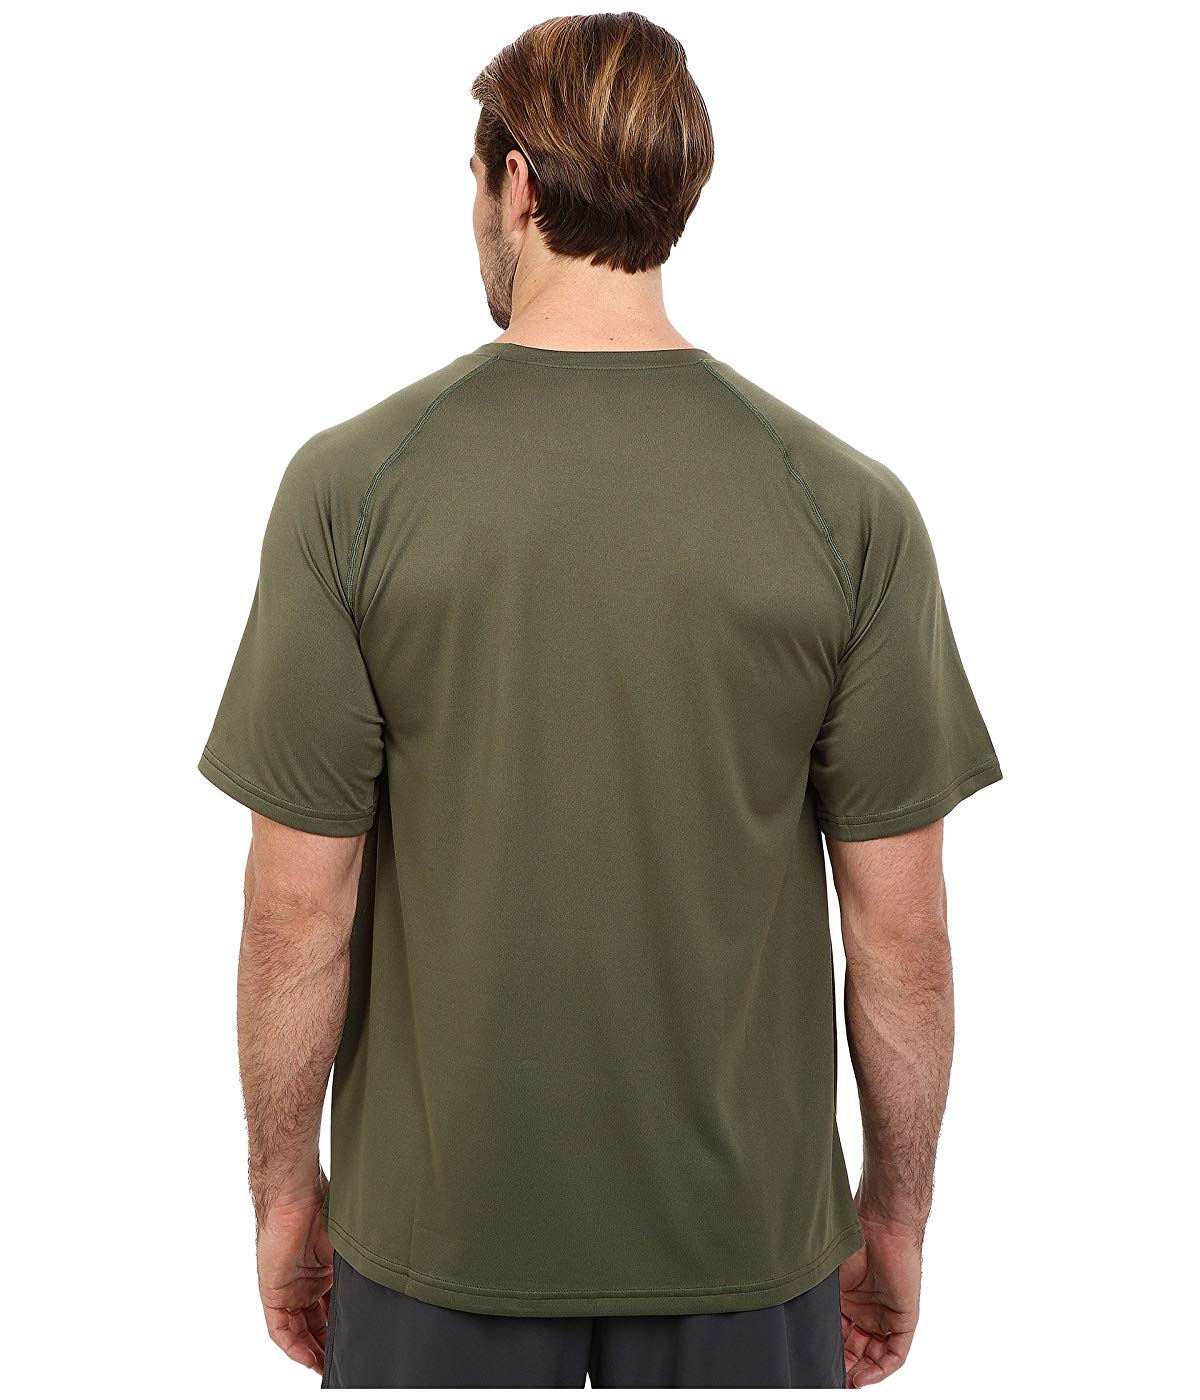 Under Armour Men's Tactical Tech T-Shirt - image 4 of 4